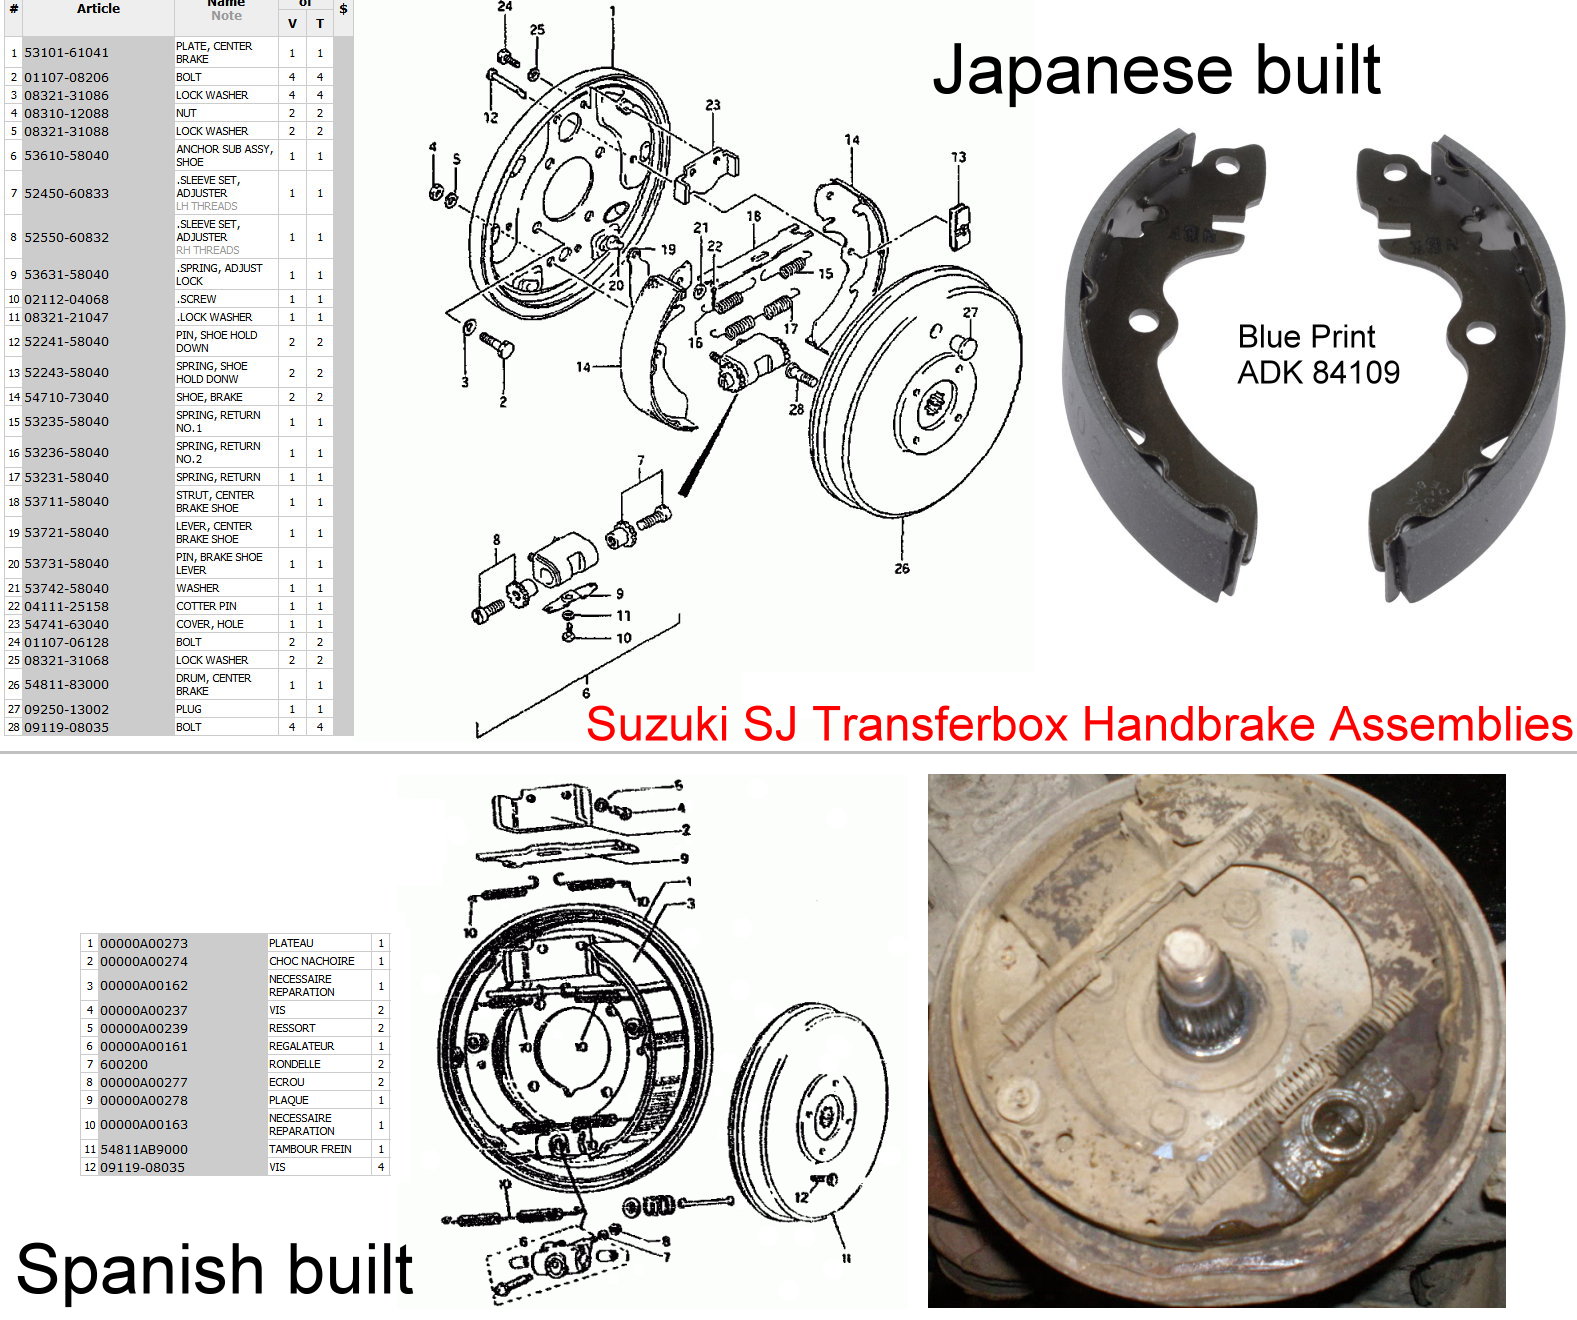 Suzuki SJ transferbox handbrake assemblies.jpg